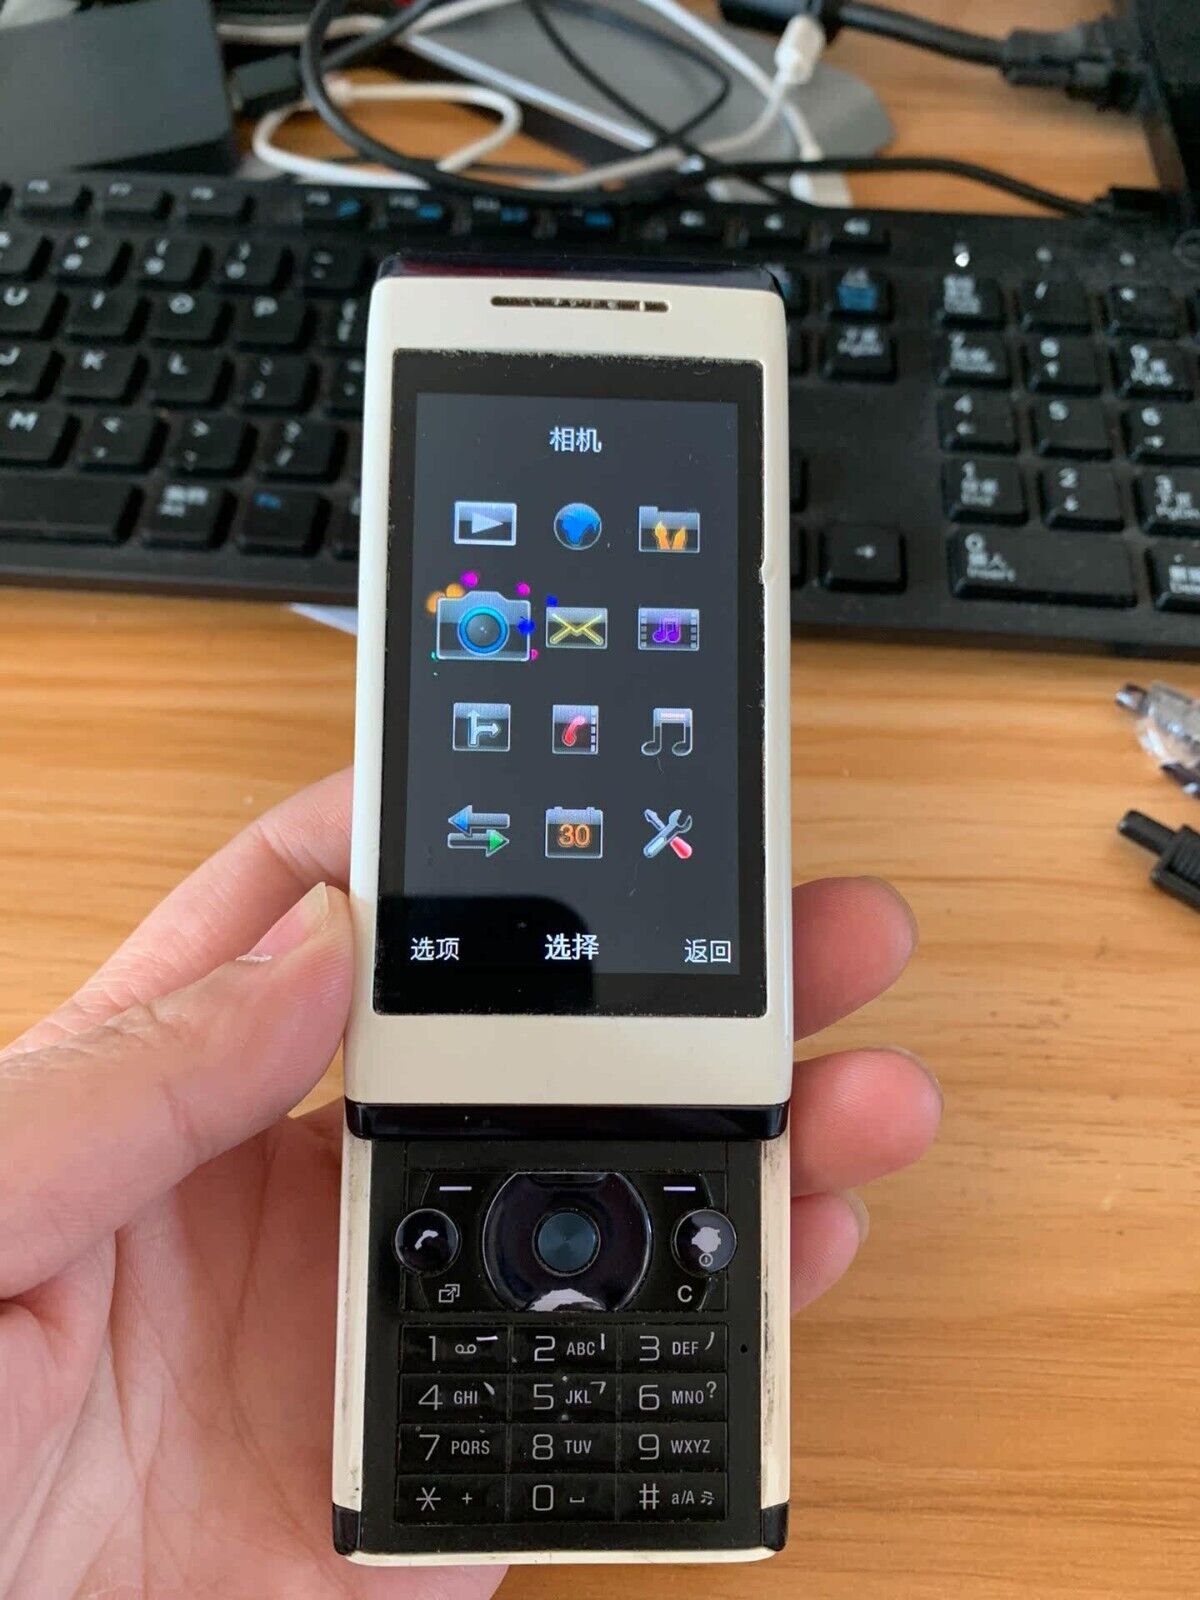 Original Sony Ericssion Aino U10i Slide Phone in india